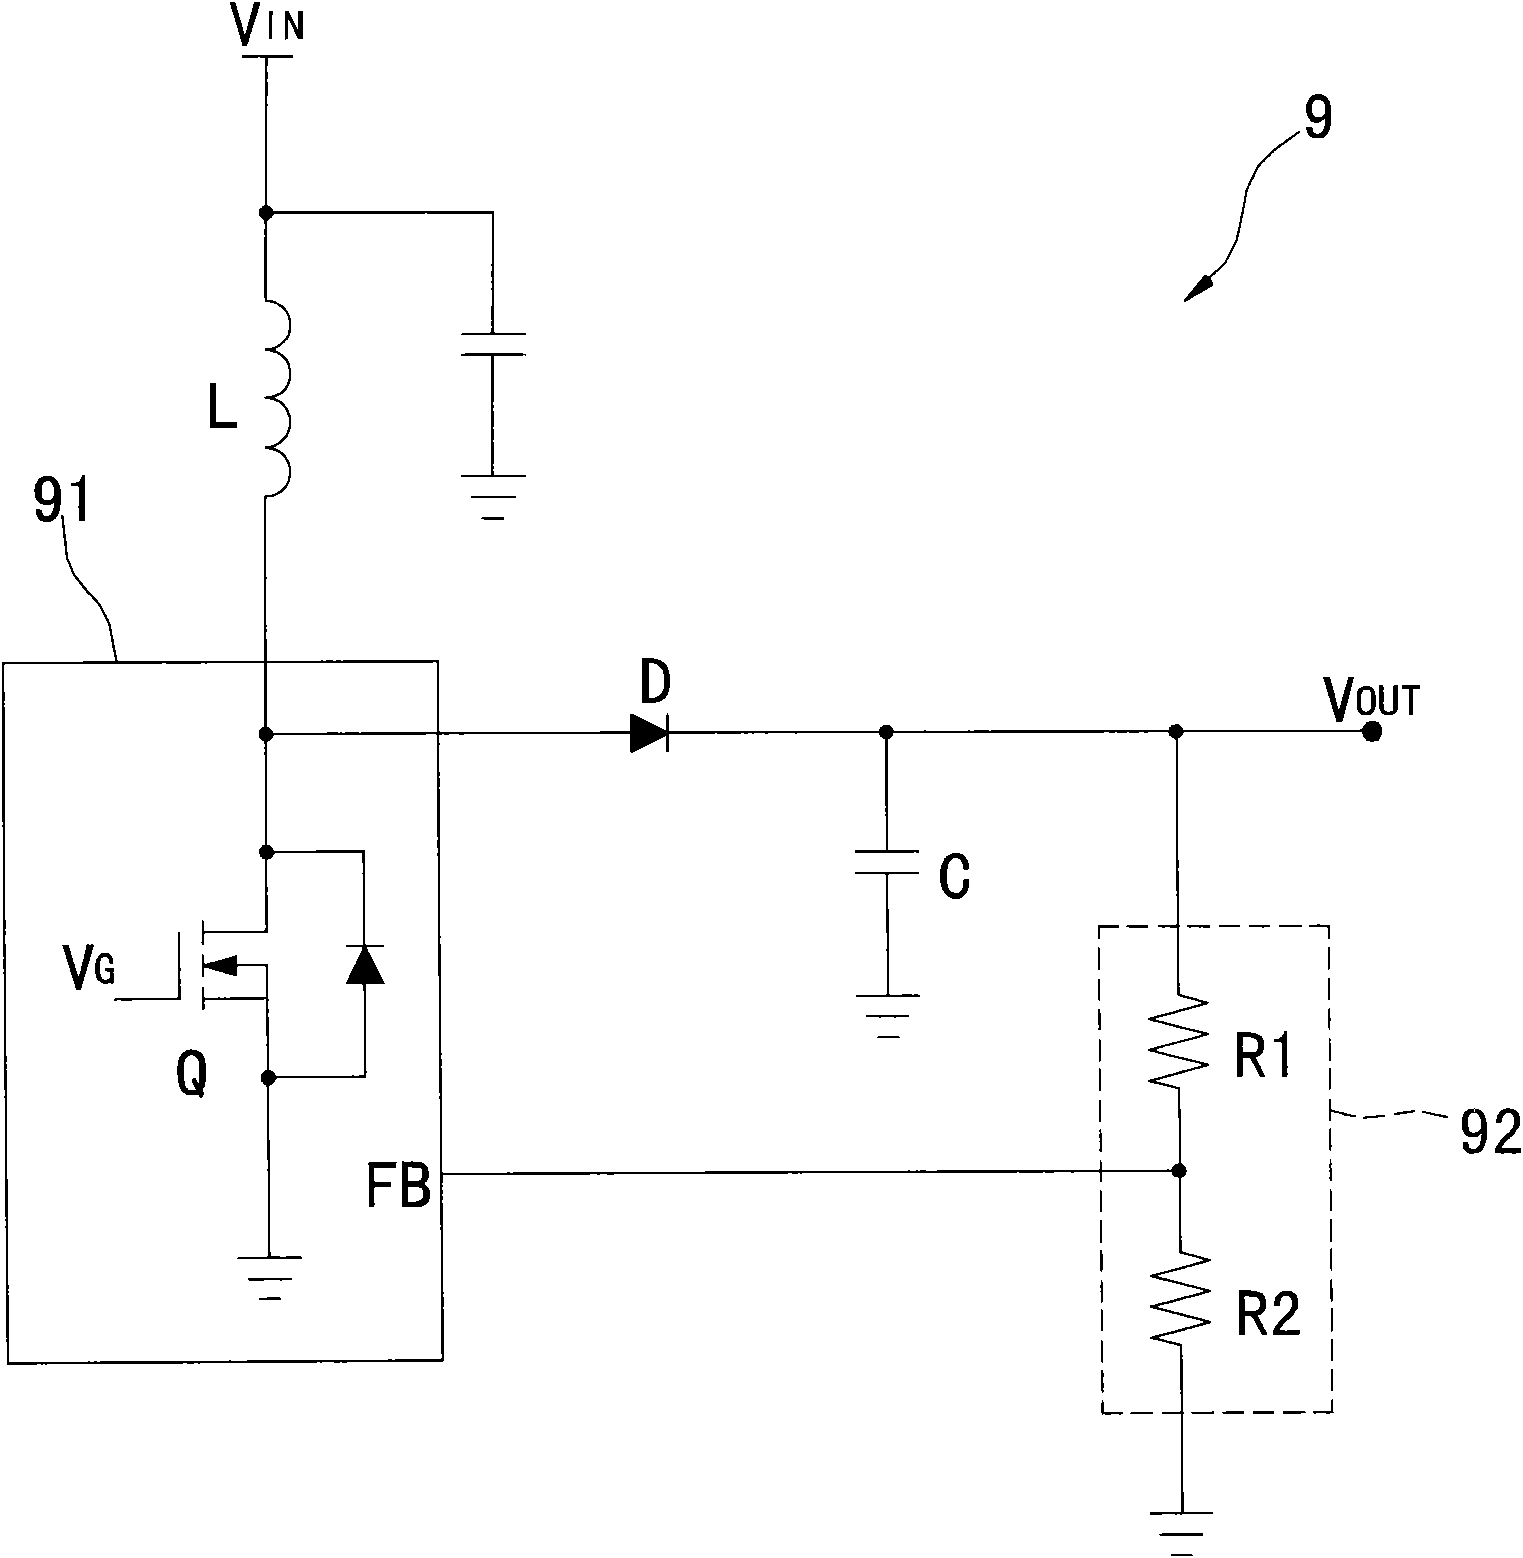 Direct-current voltage conversion device